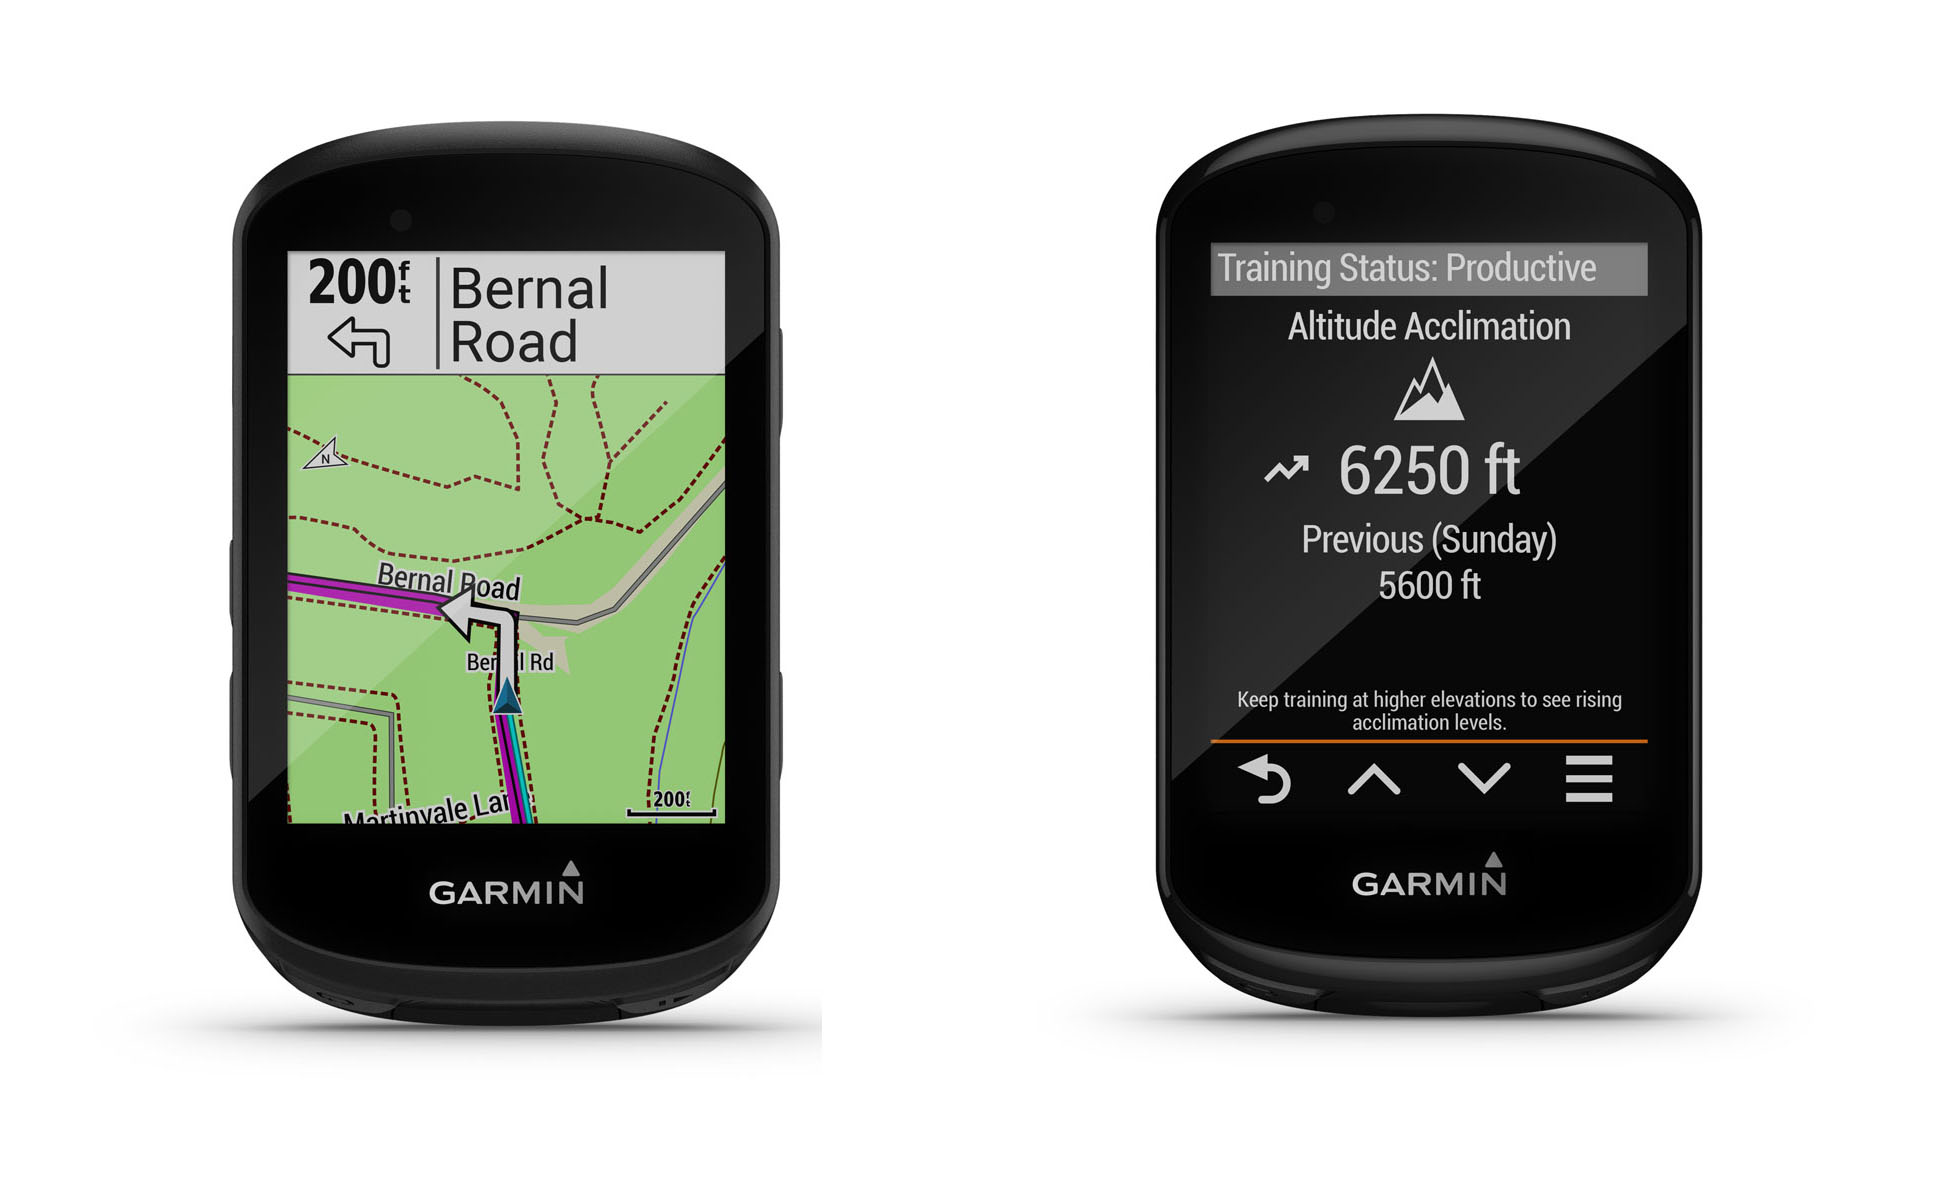 Garmin Edge 530 & 830 offer advanced metrics & mapping - even